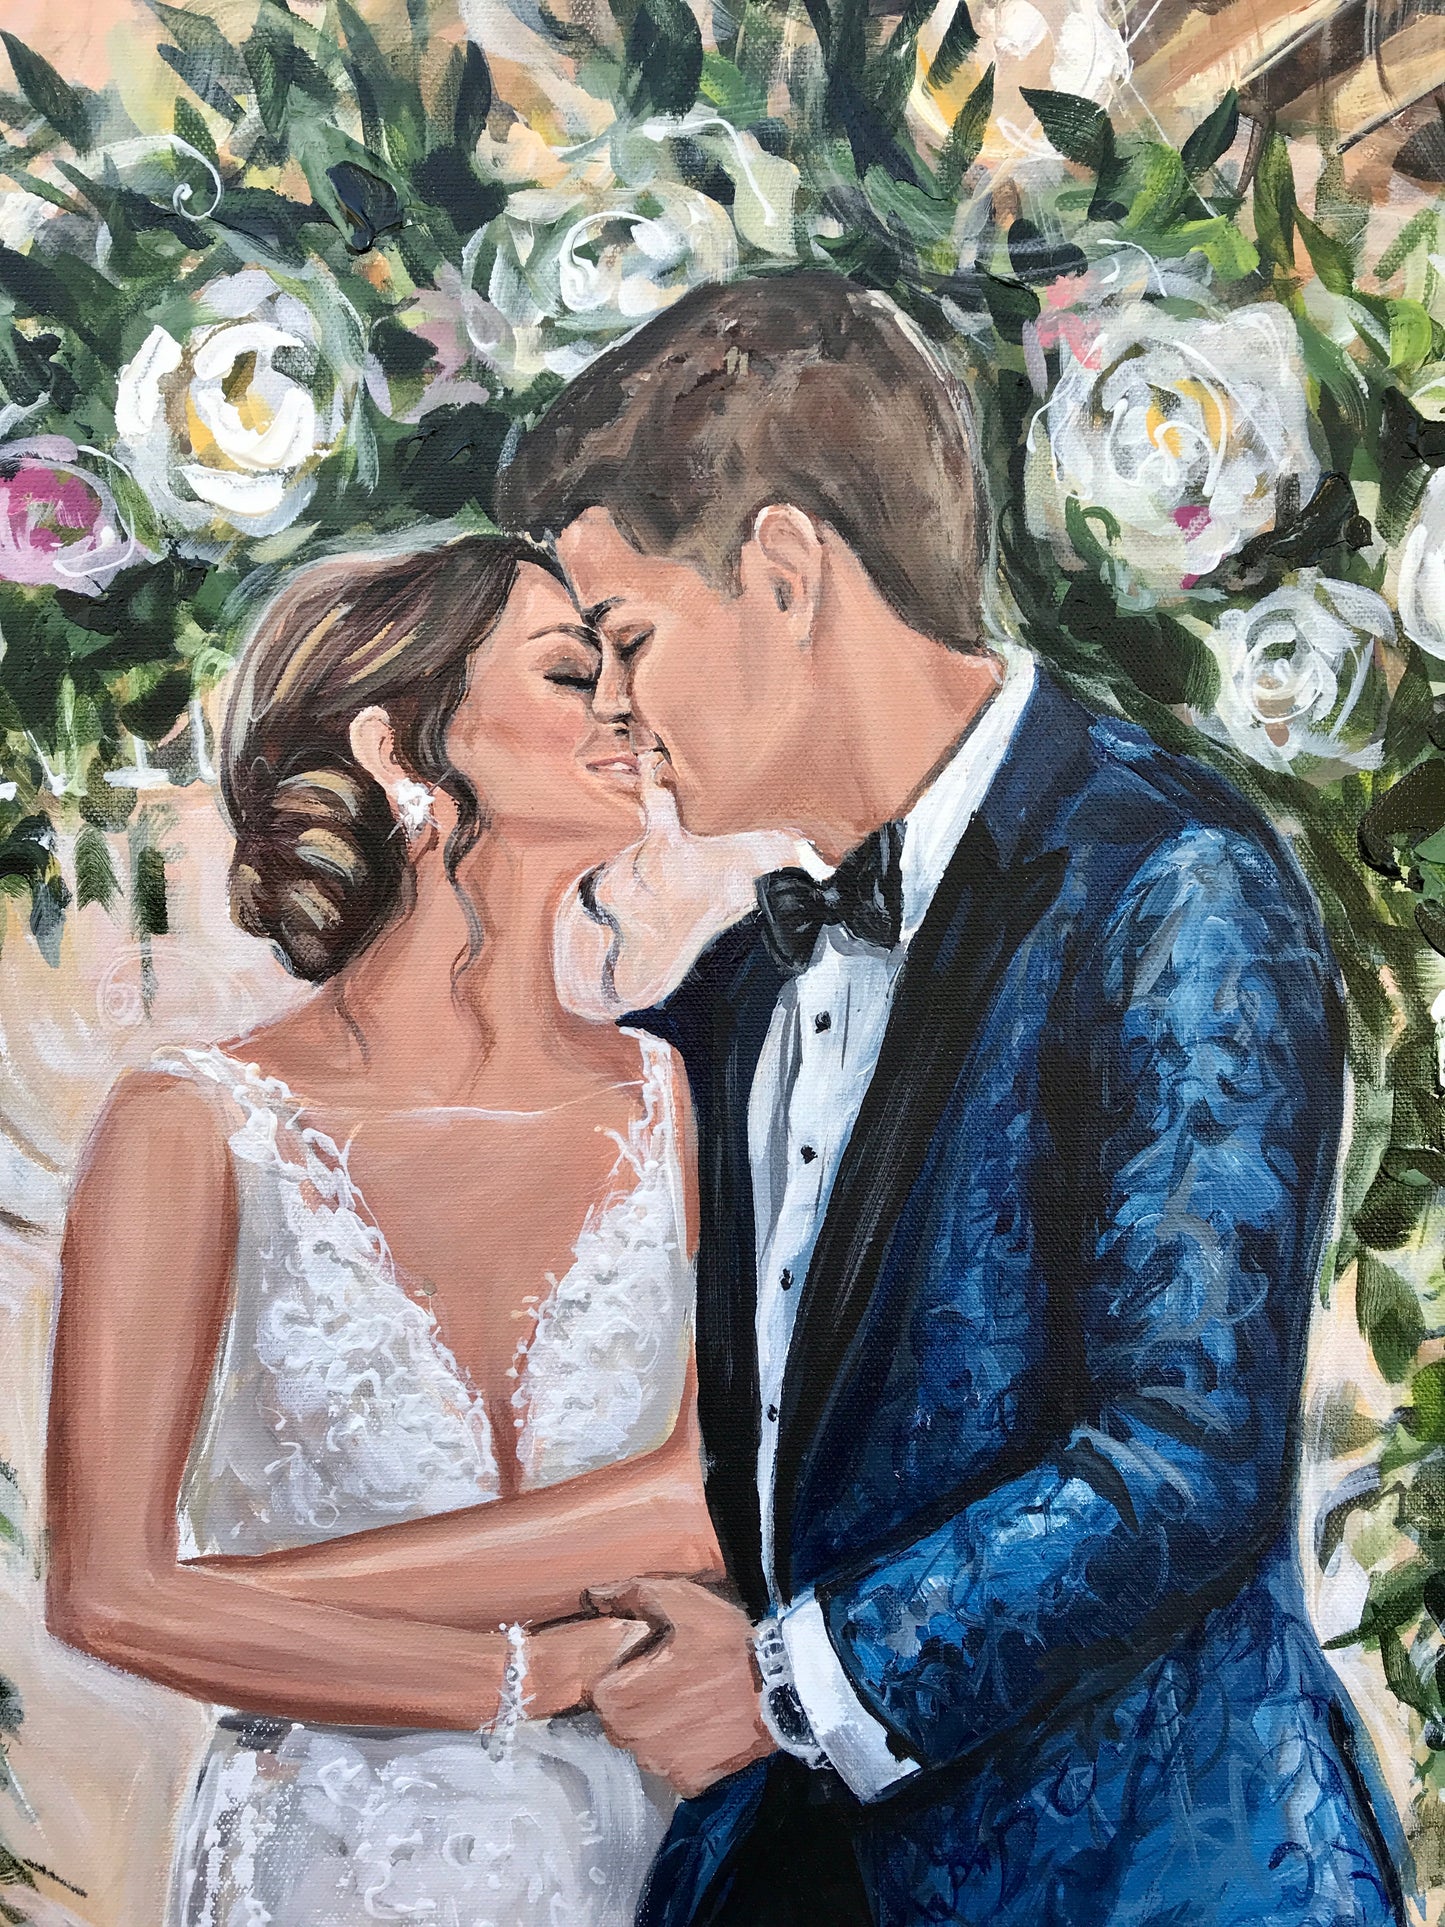 Nashville Wedding 1st Dance Captured In A Painting 2022